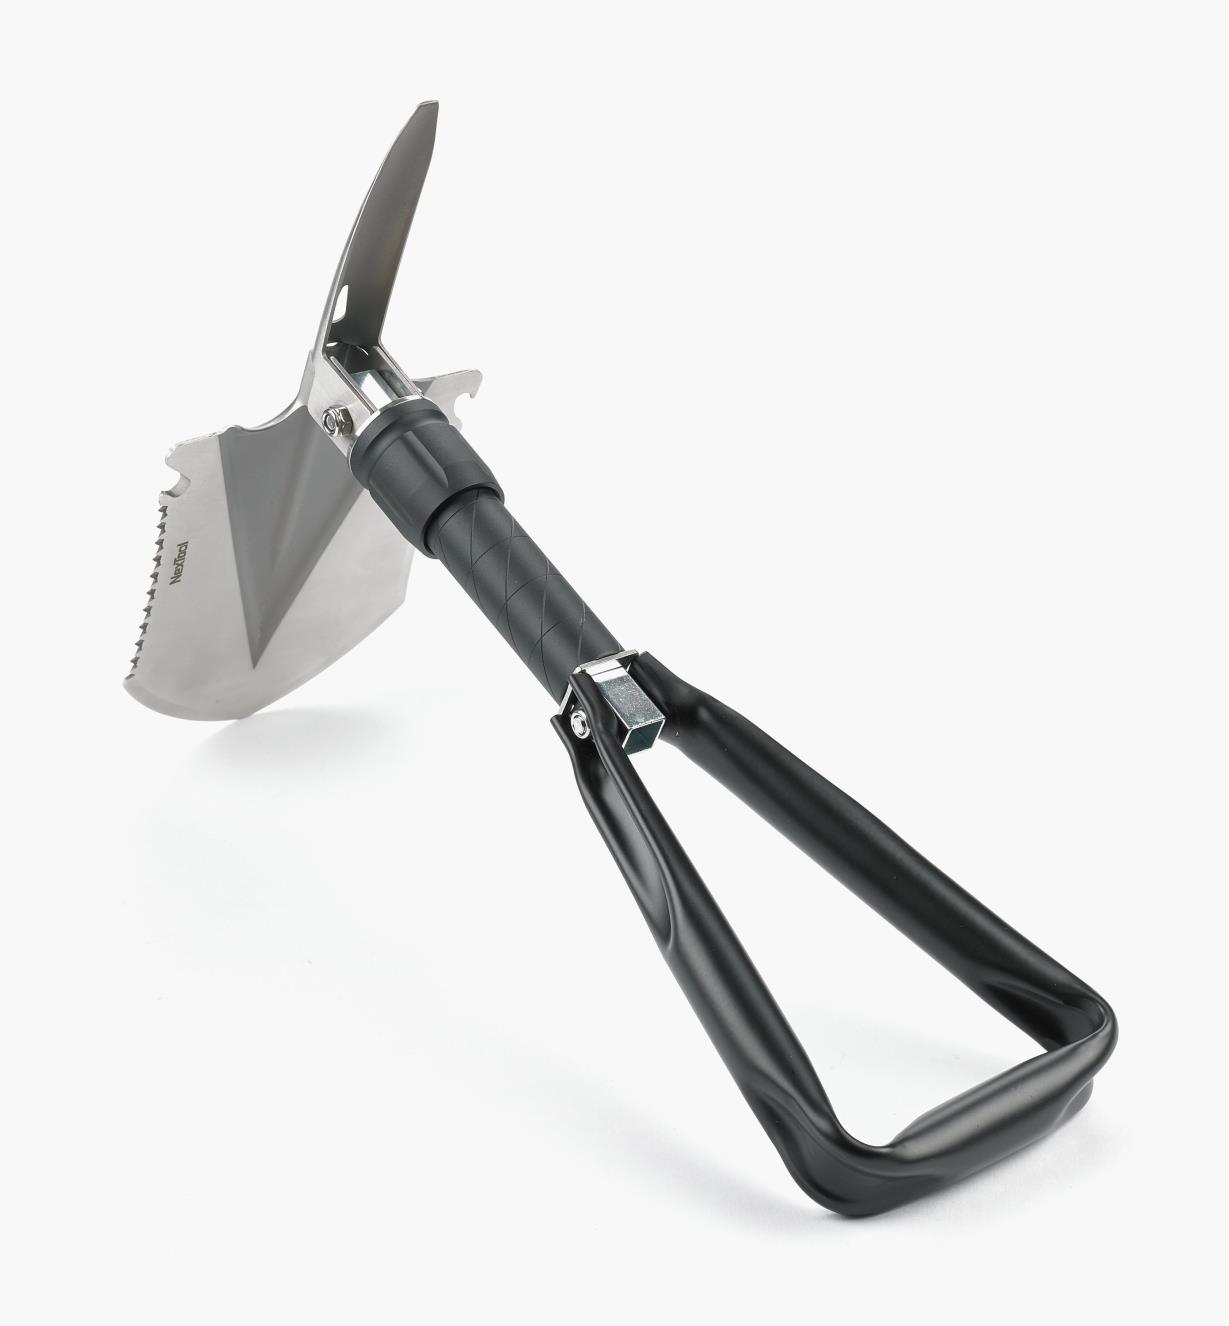 45K1562 - Folding Shovel